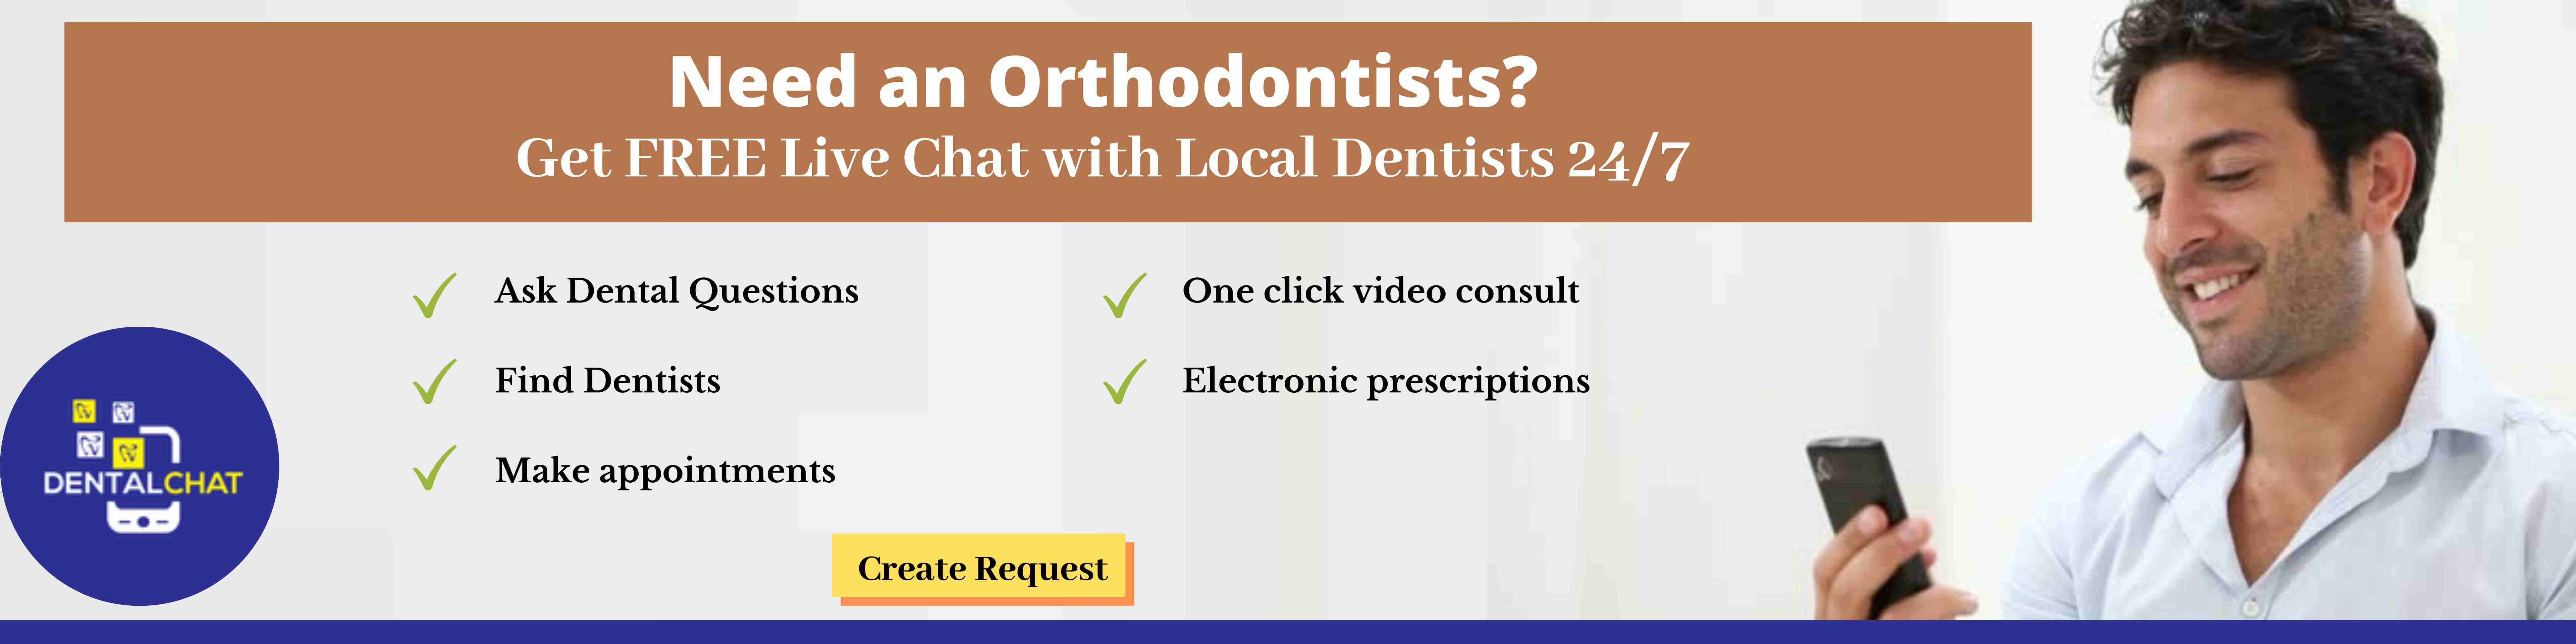 Online Orthodontics Blog, Local Orthodontist Dental Specialty Blog, Orthodontists Chat